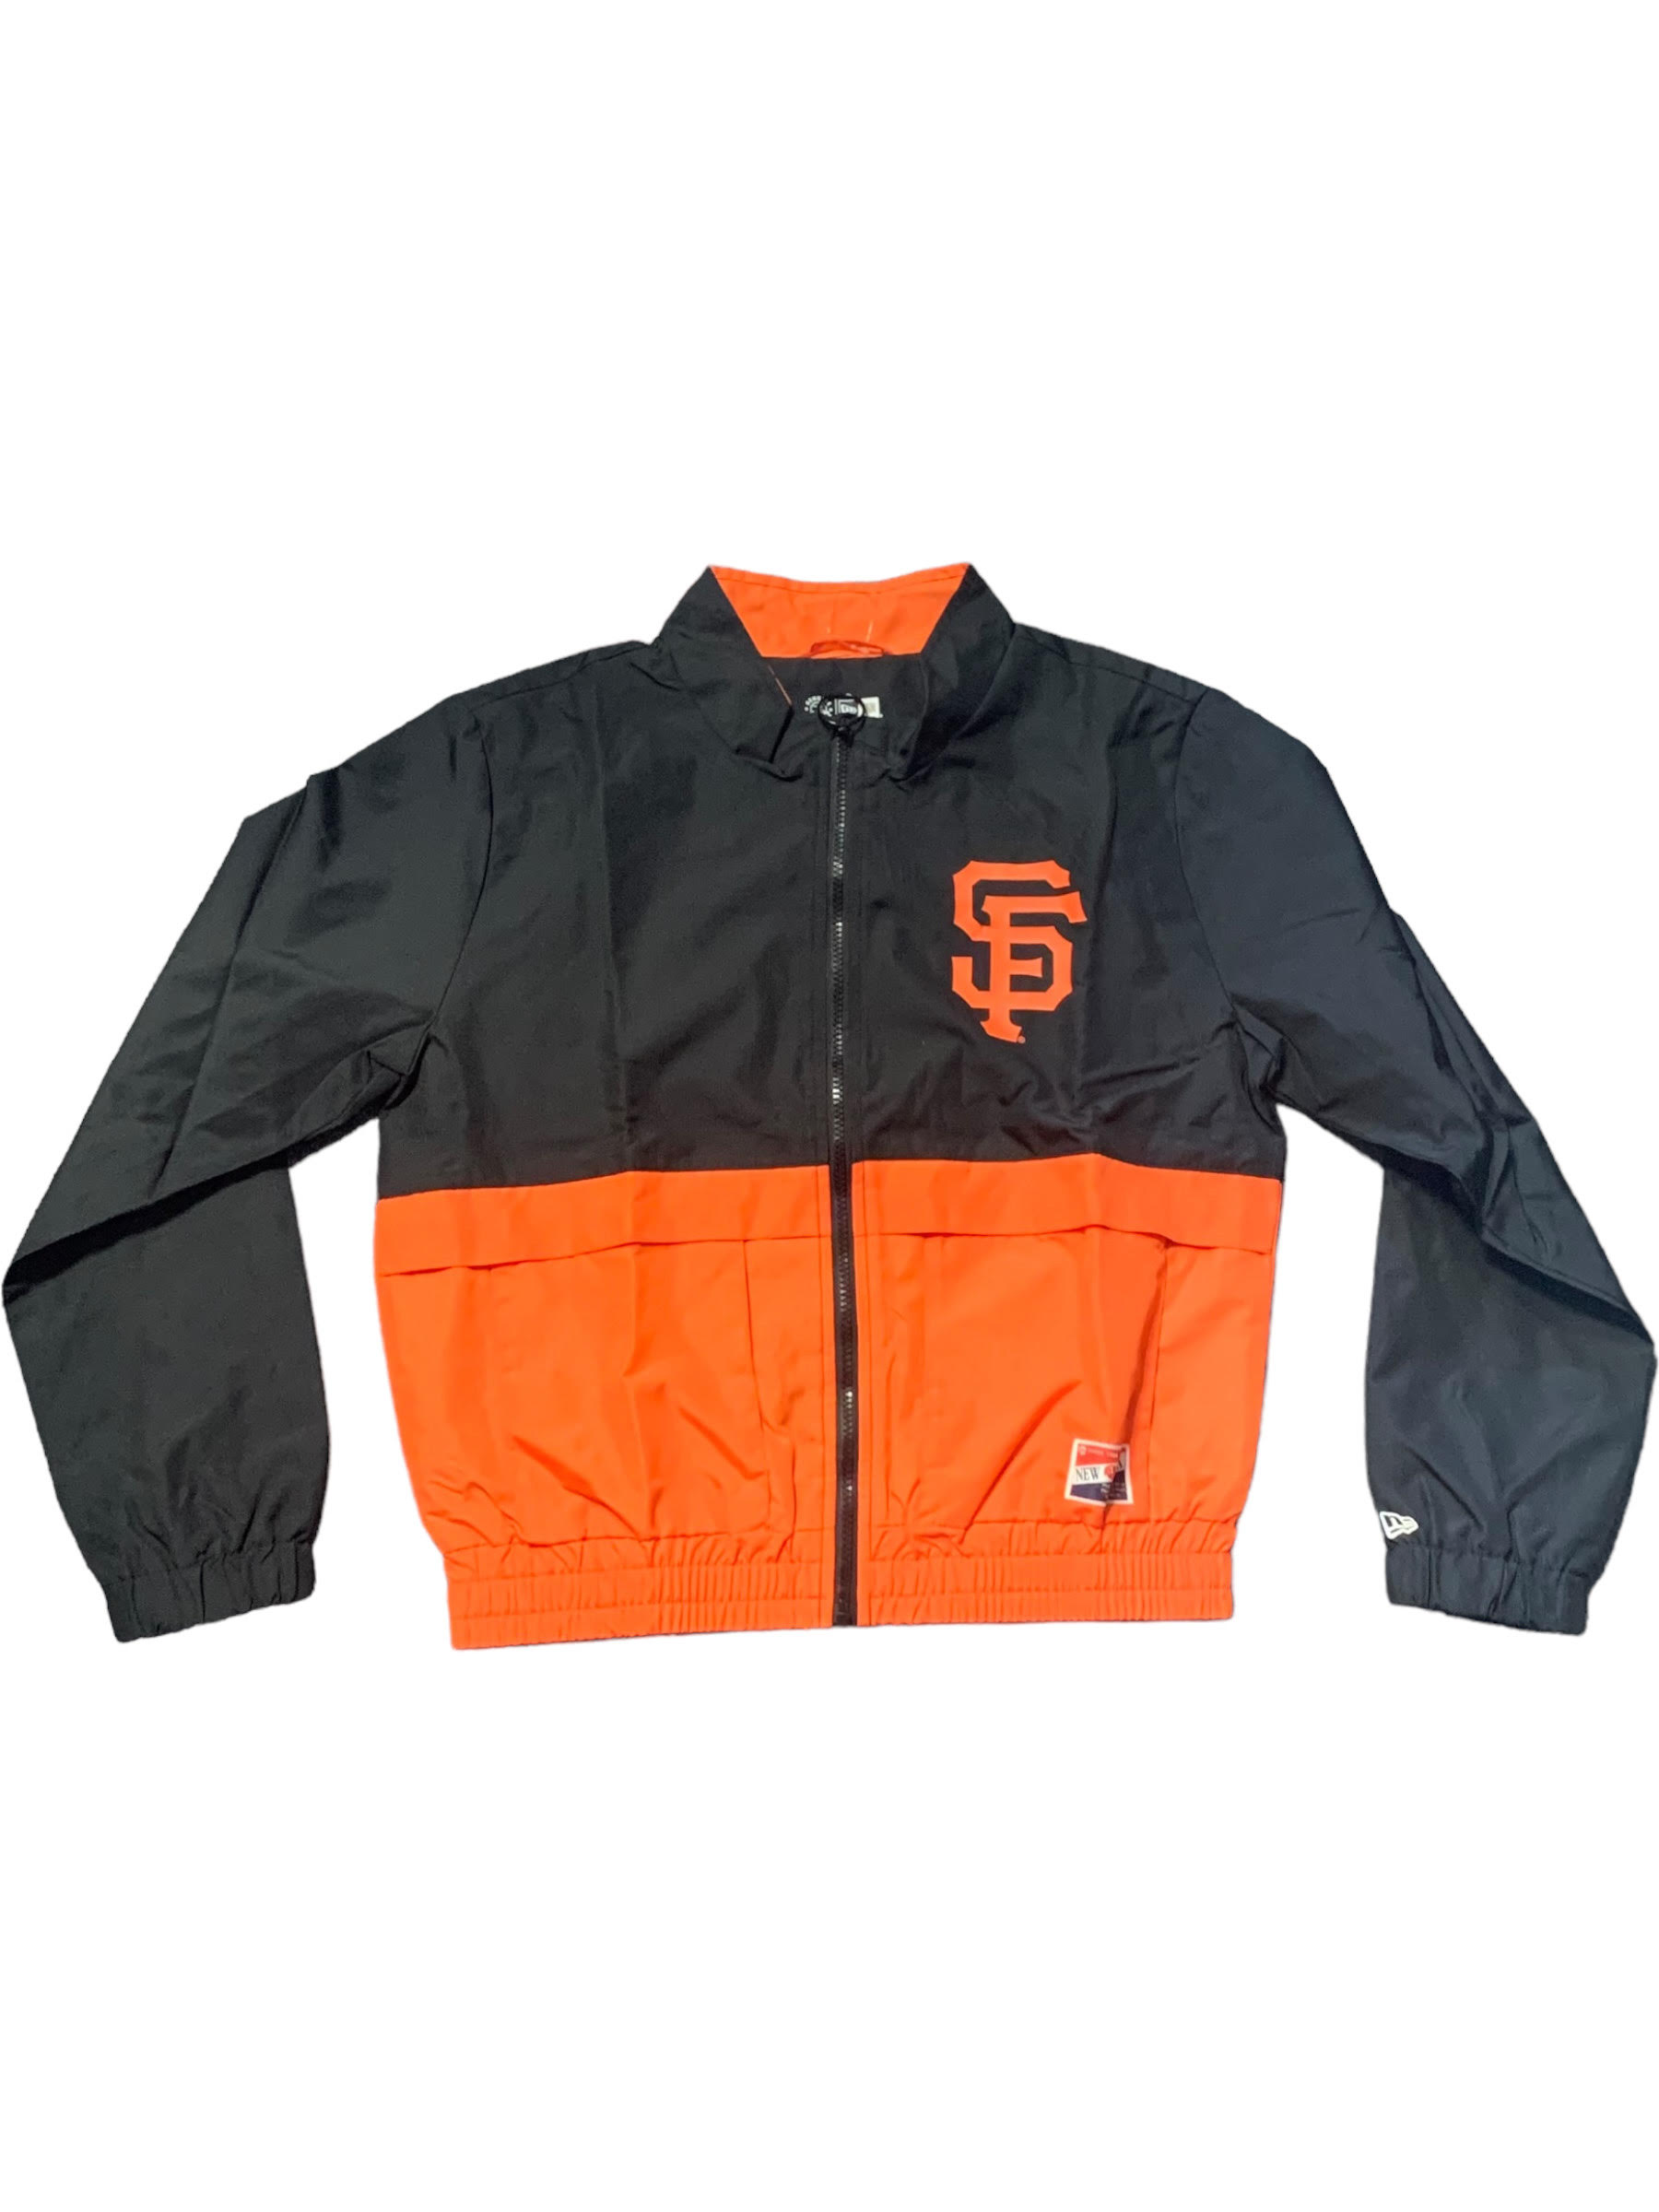 Vintage San Francisco Giants Starter Script Baseball Jersey, Size